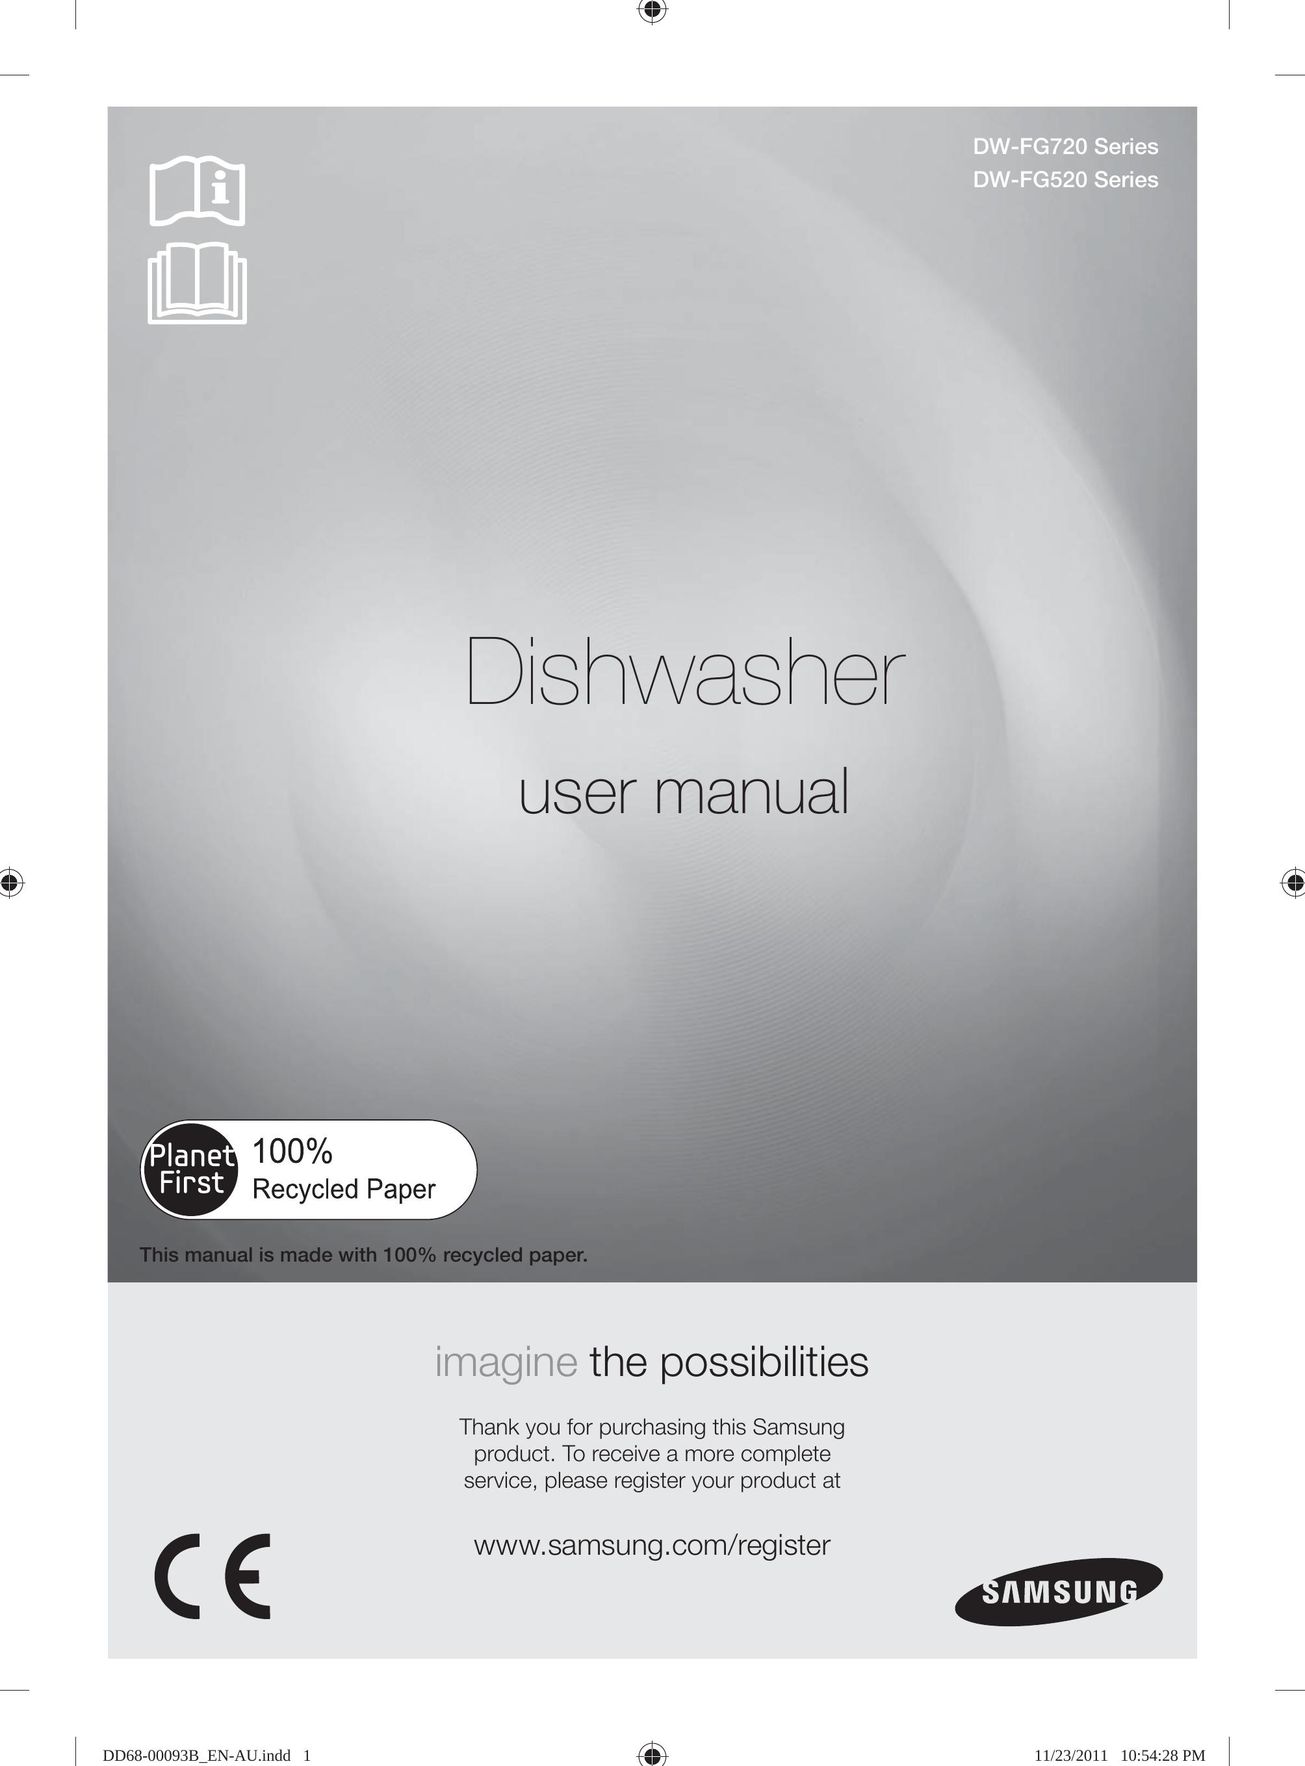 Samsung DW-FG720 Dishwasher User Manual